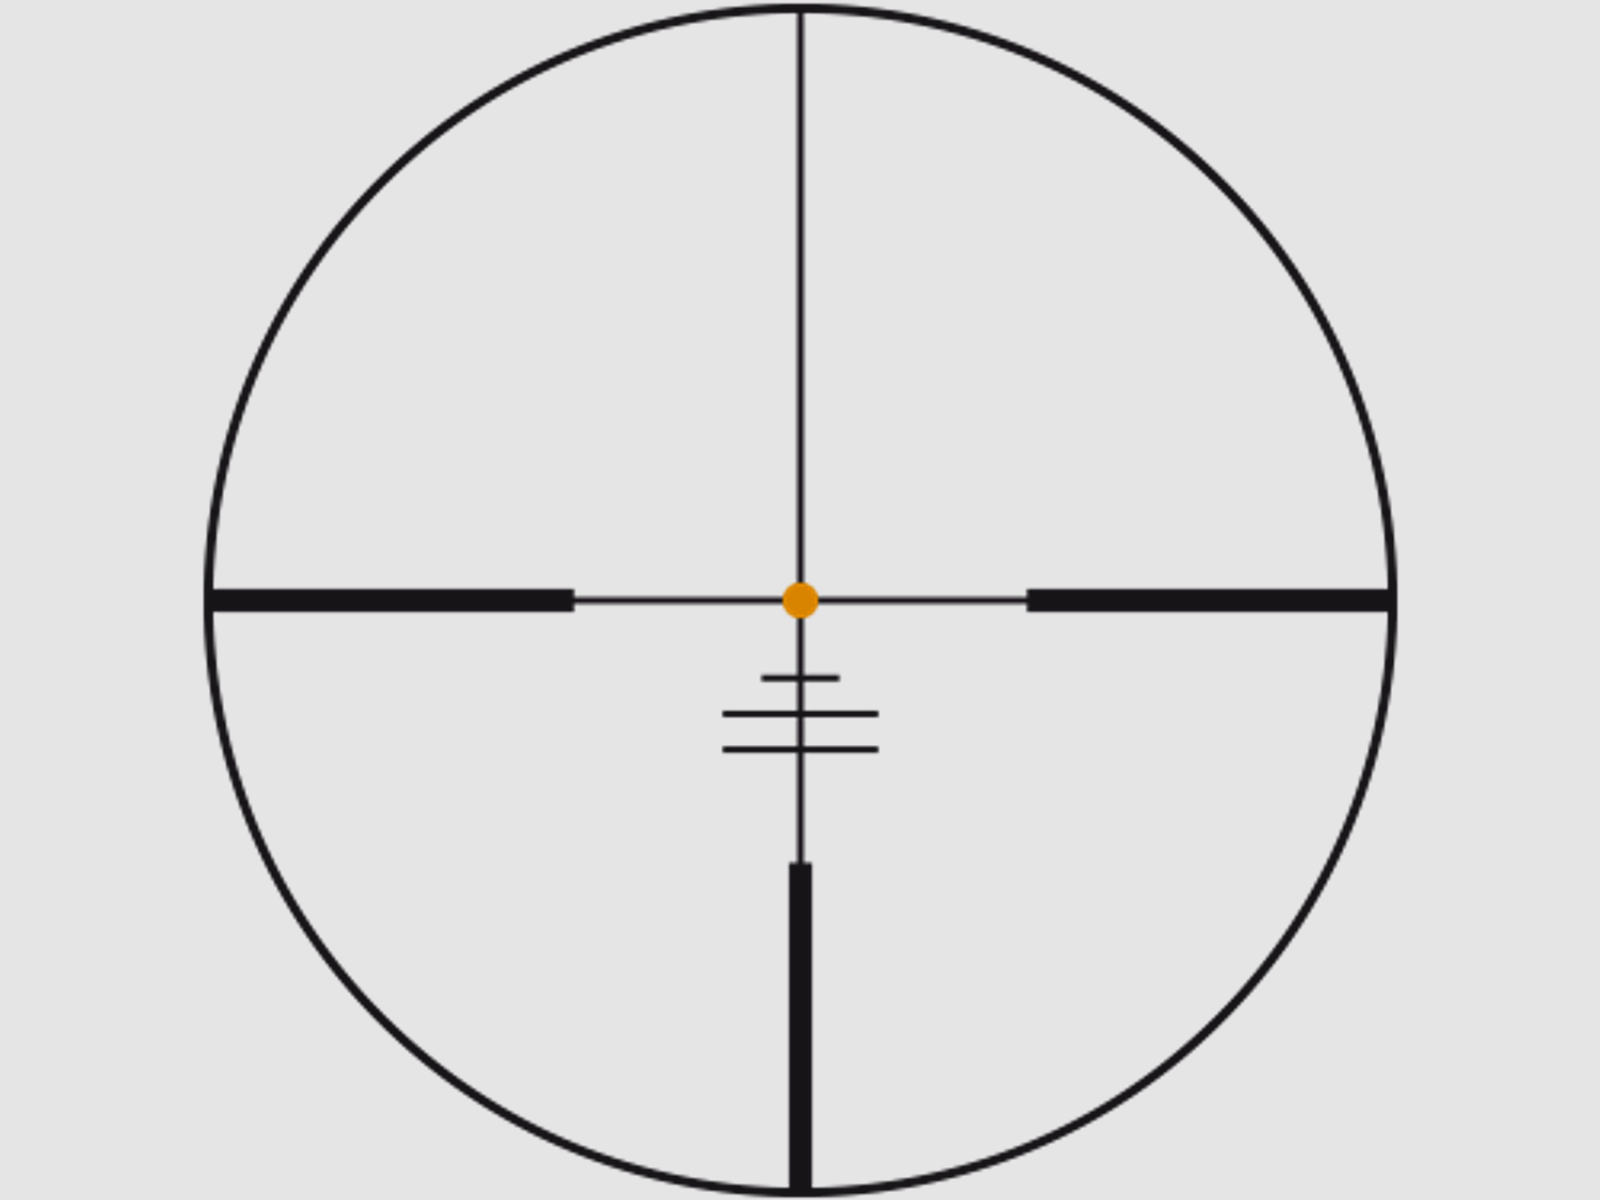 SWAROVSKI Zielfernrohr mit Leuchtabsehen 1,7-13,3x42 P Z8i SR Abs. 4A-I/4A-300I